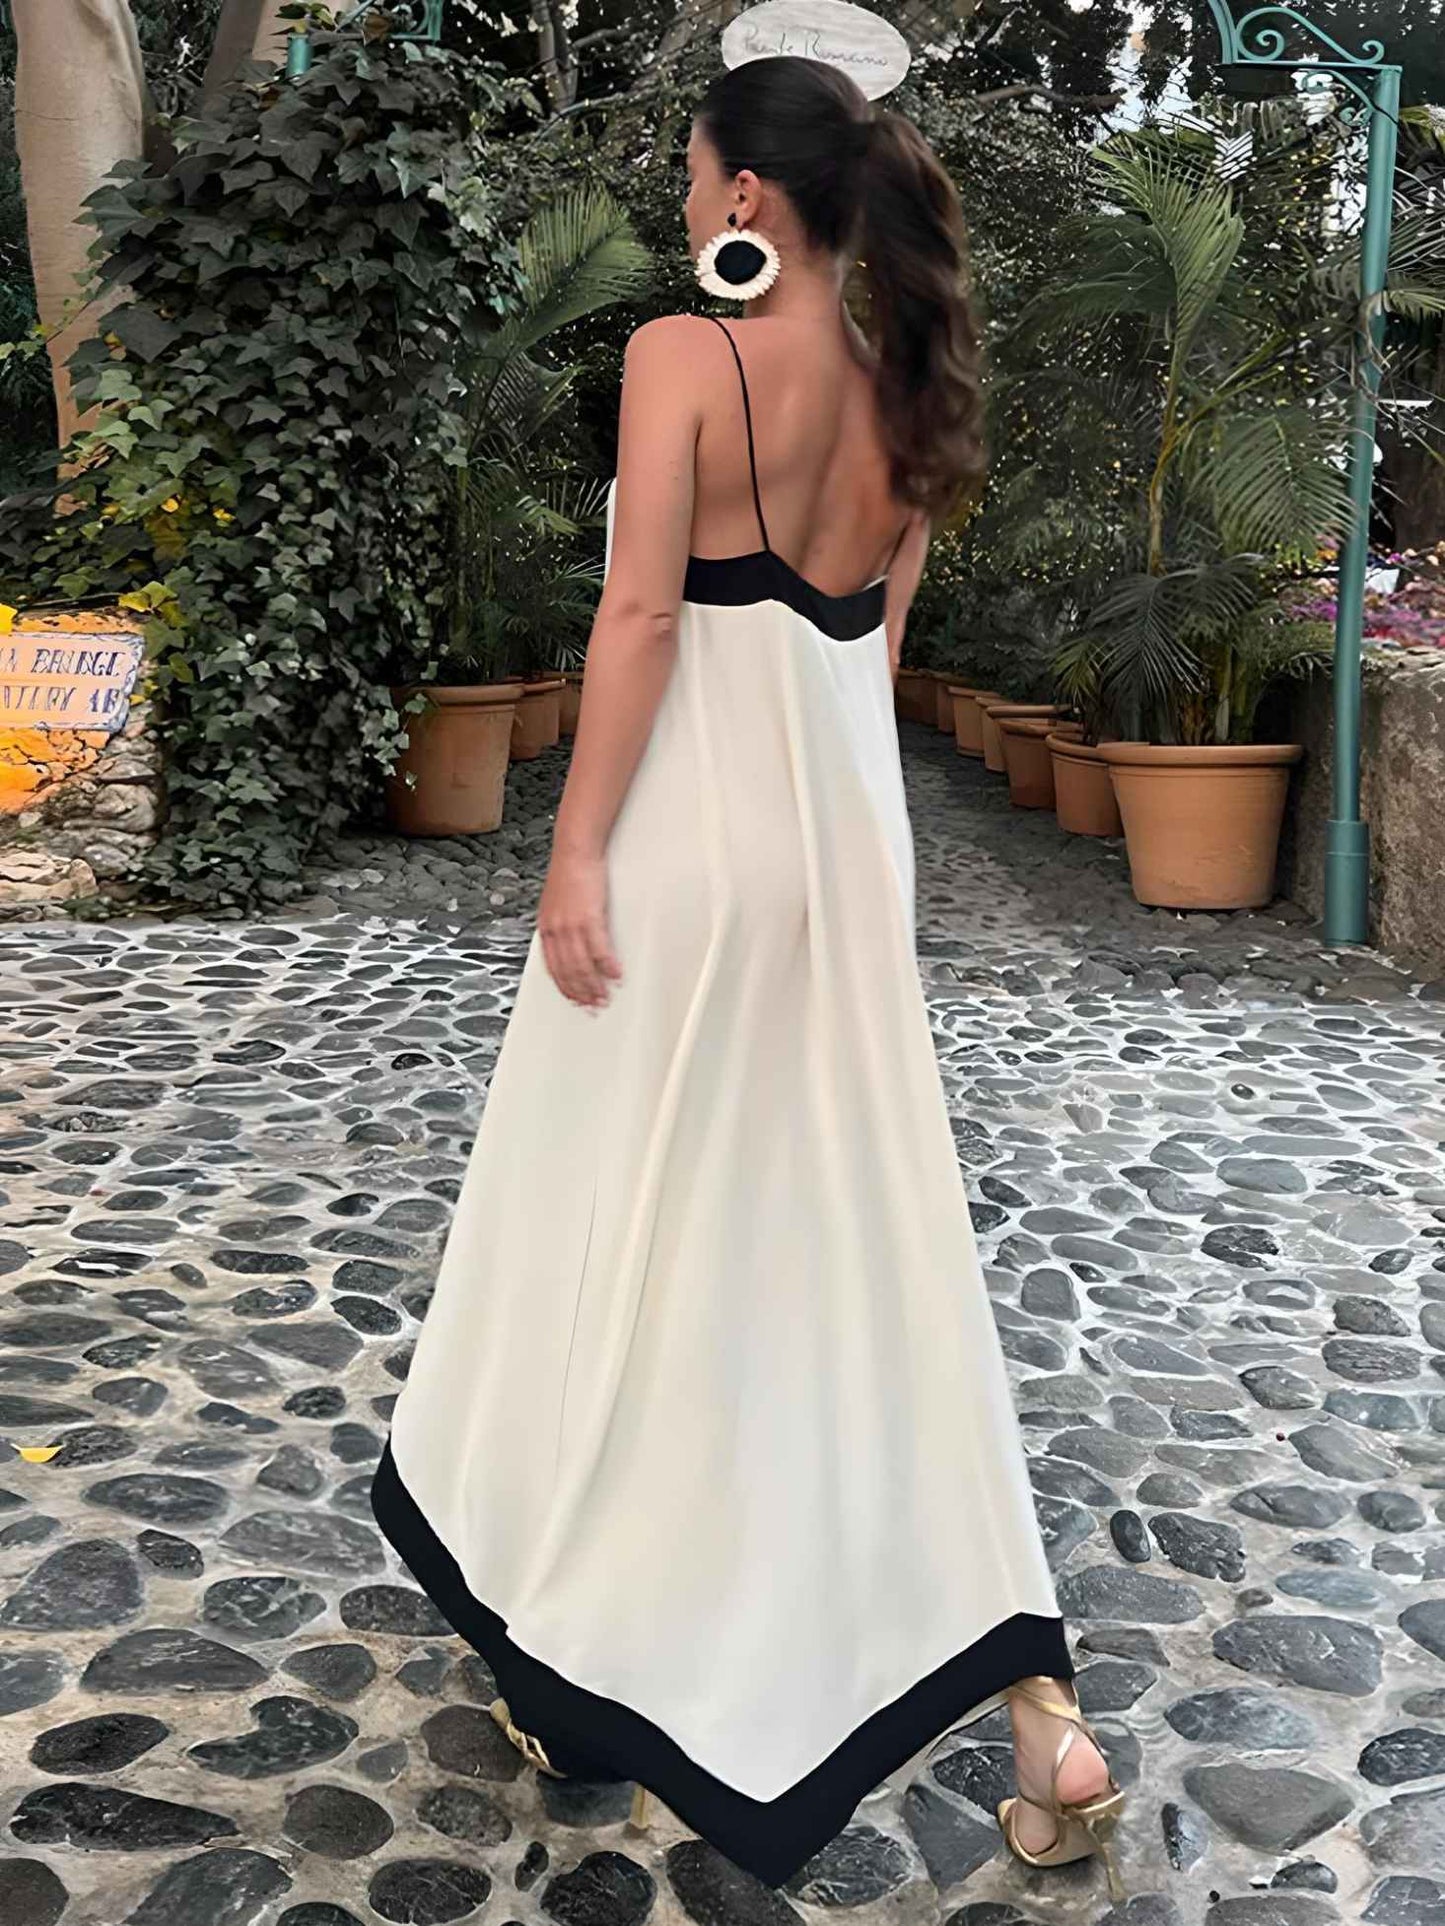 Ofelia | Opulent Elegance Gown